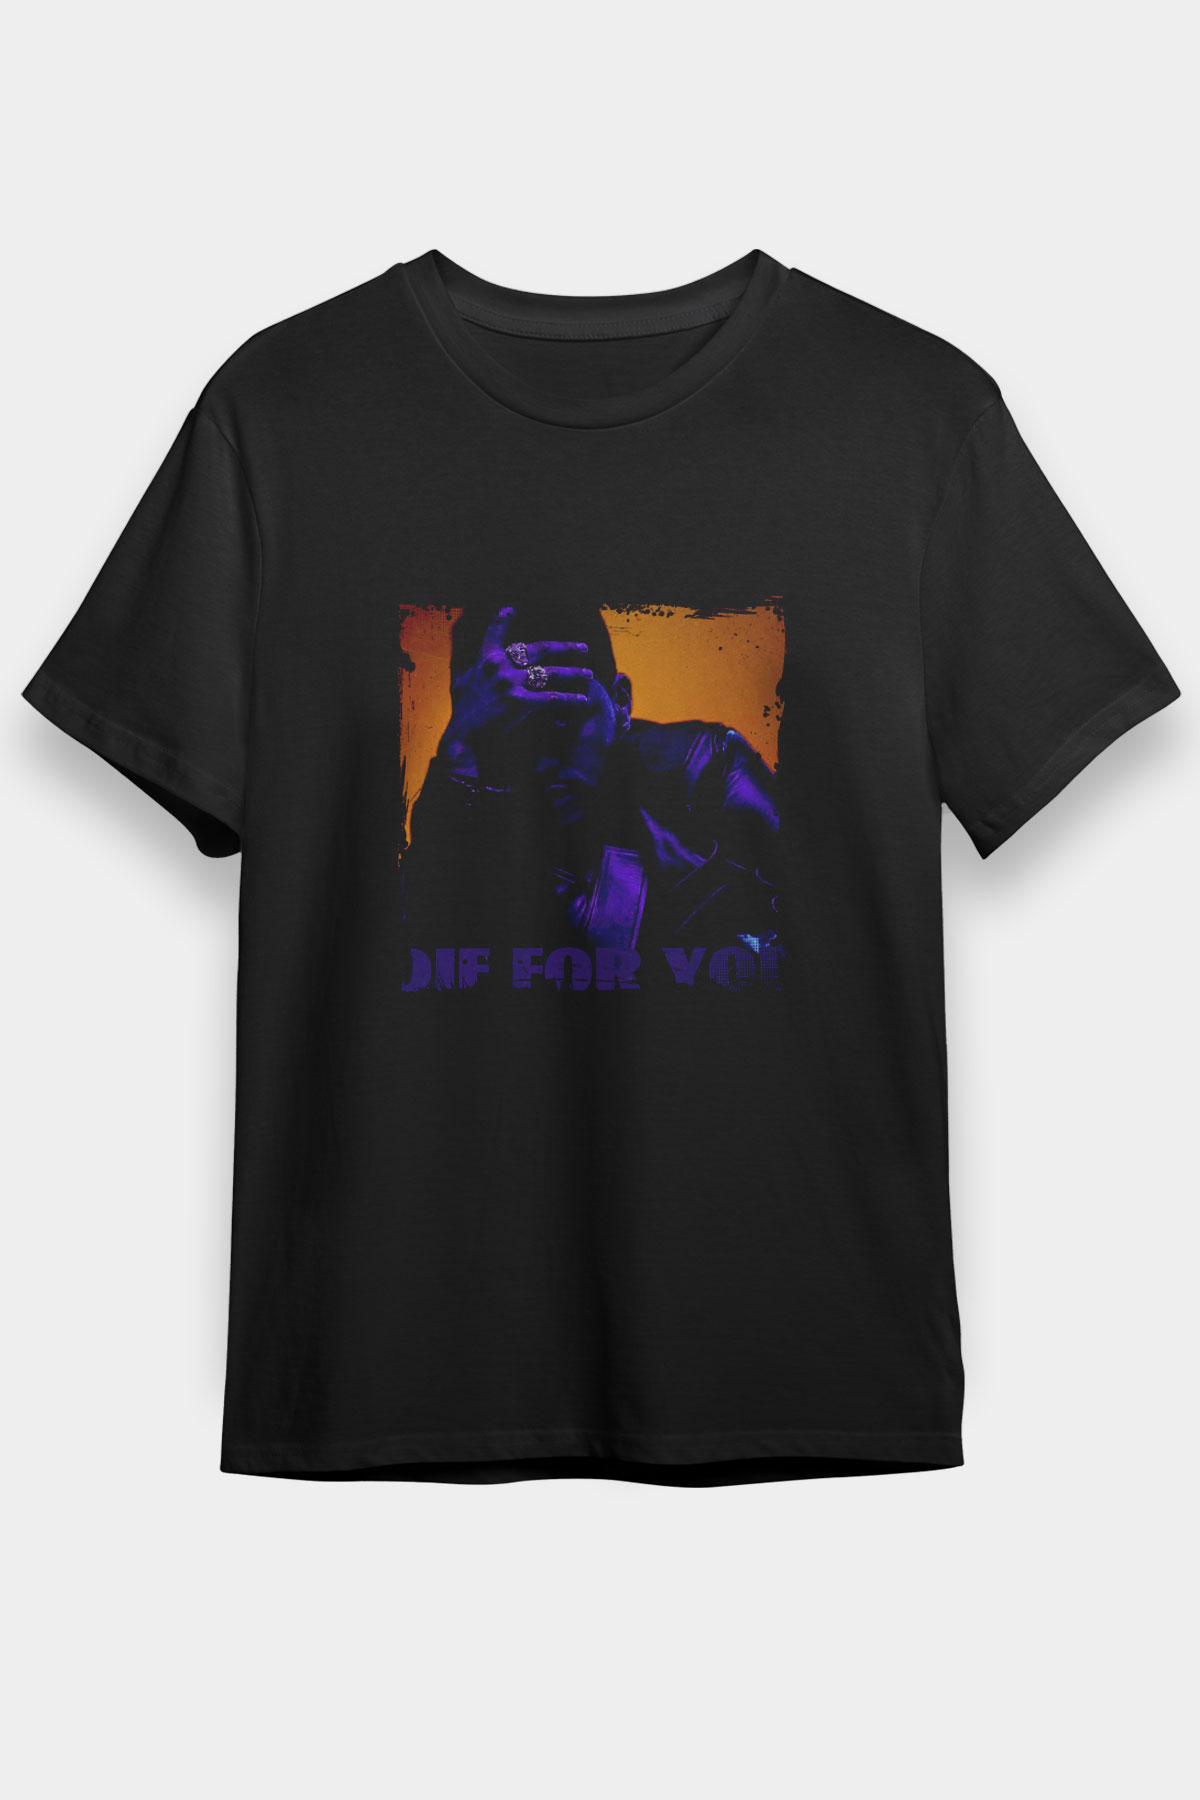 The Weeknd T shirt,Music Band,Unisex Tshirt 05/